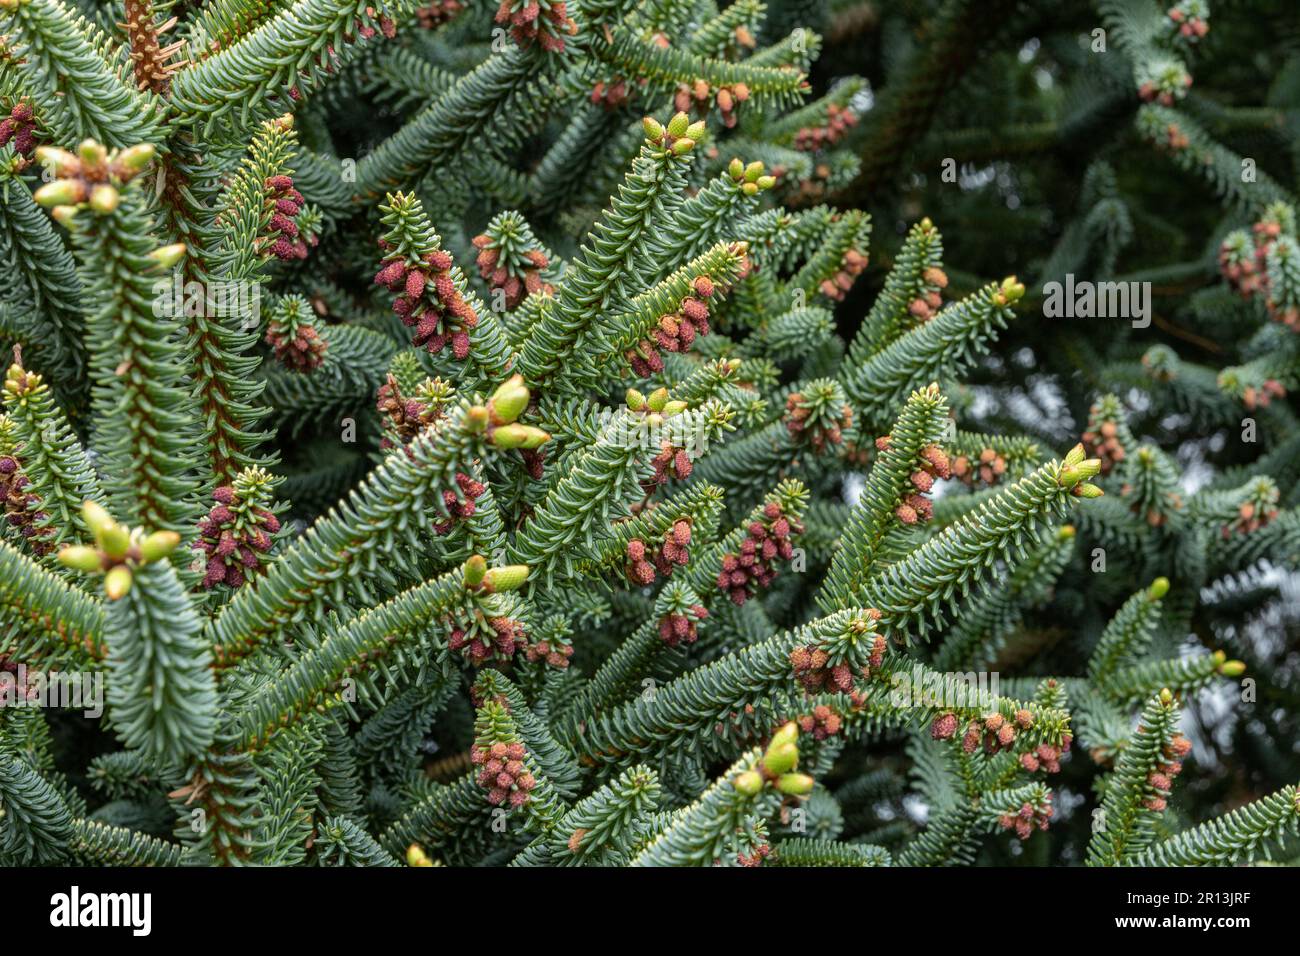 Abies pinsapo Fastigiata. A fast growing evergreen conifer. Also known as blue spanish fir or hedgehog fir. Stock Photo